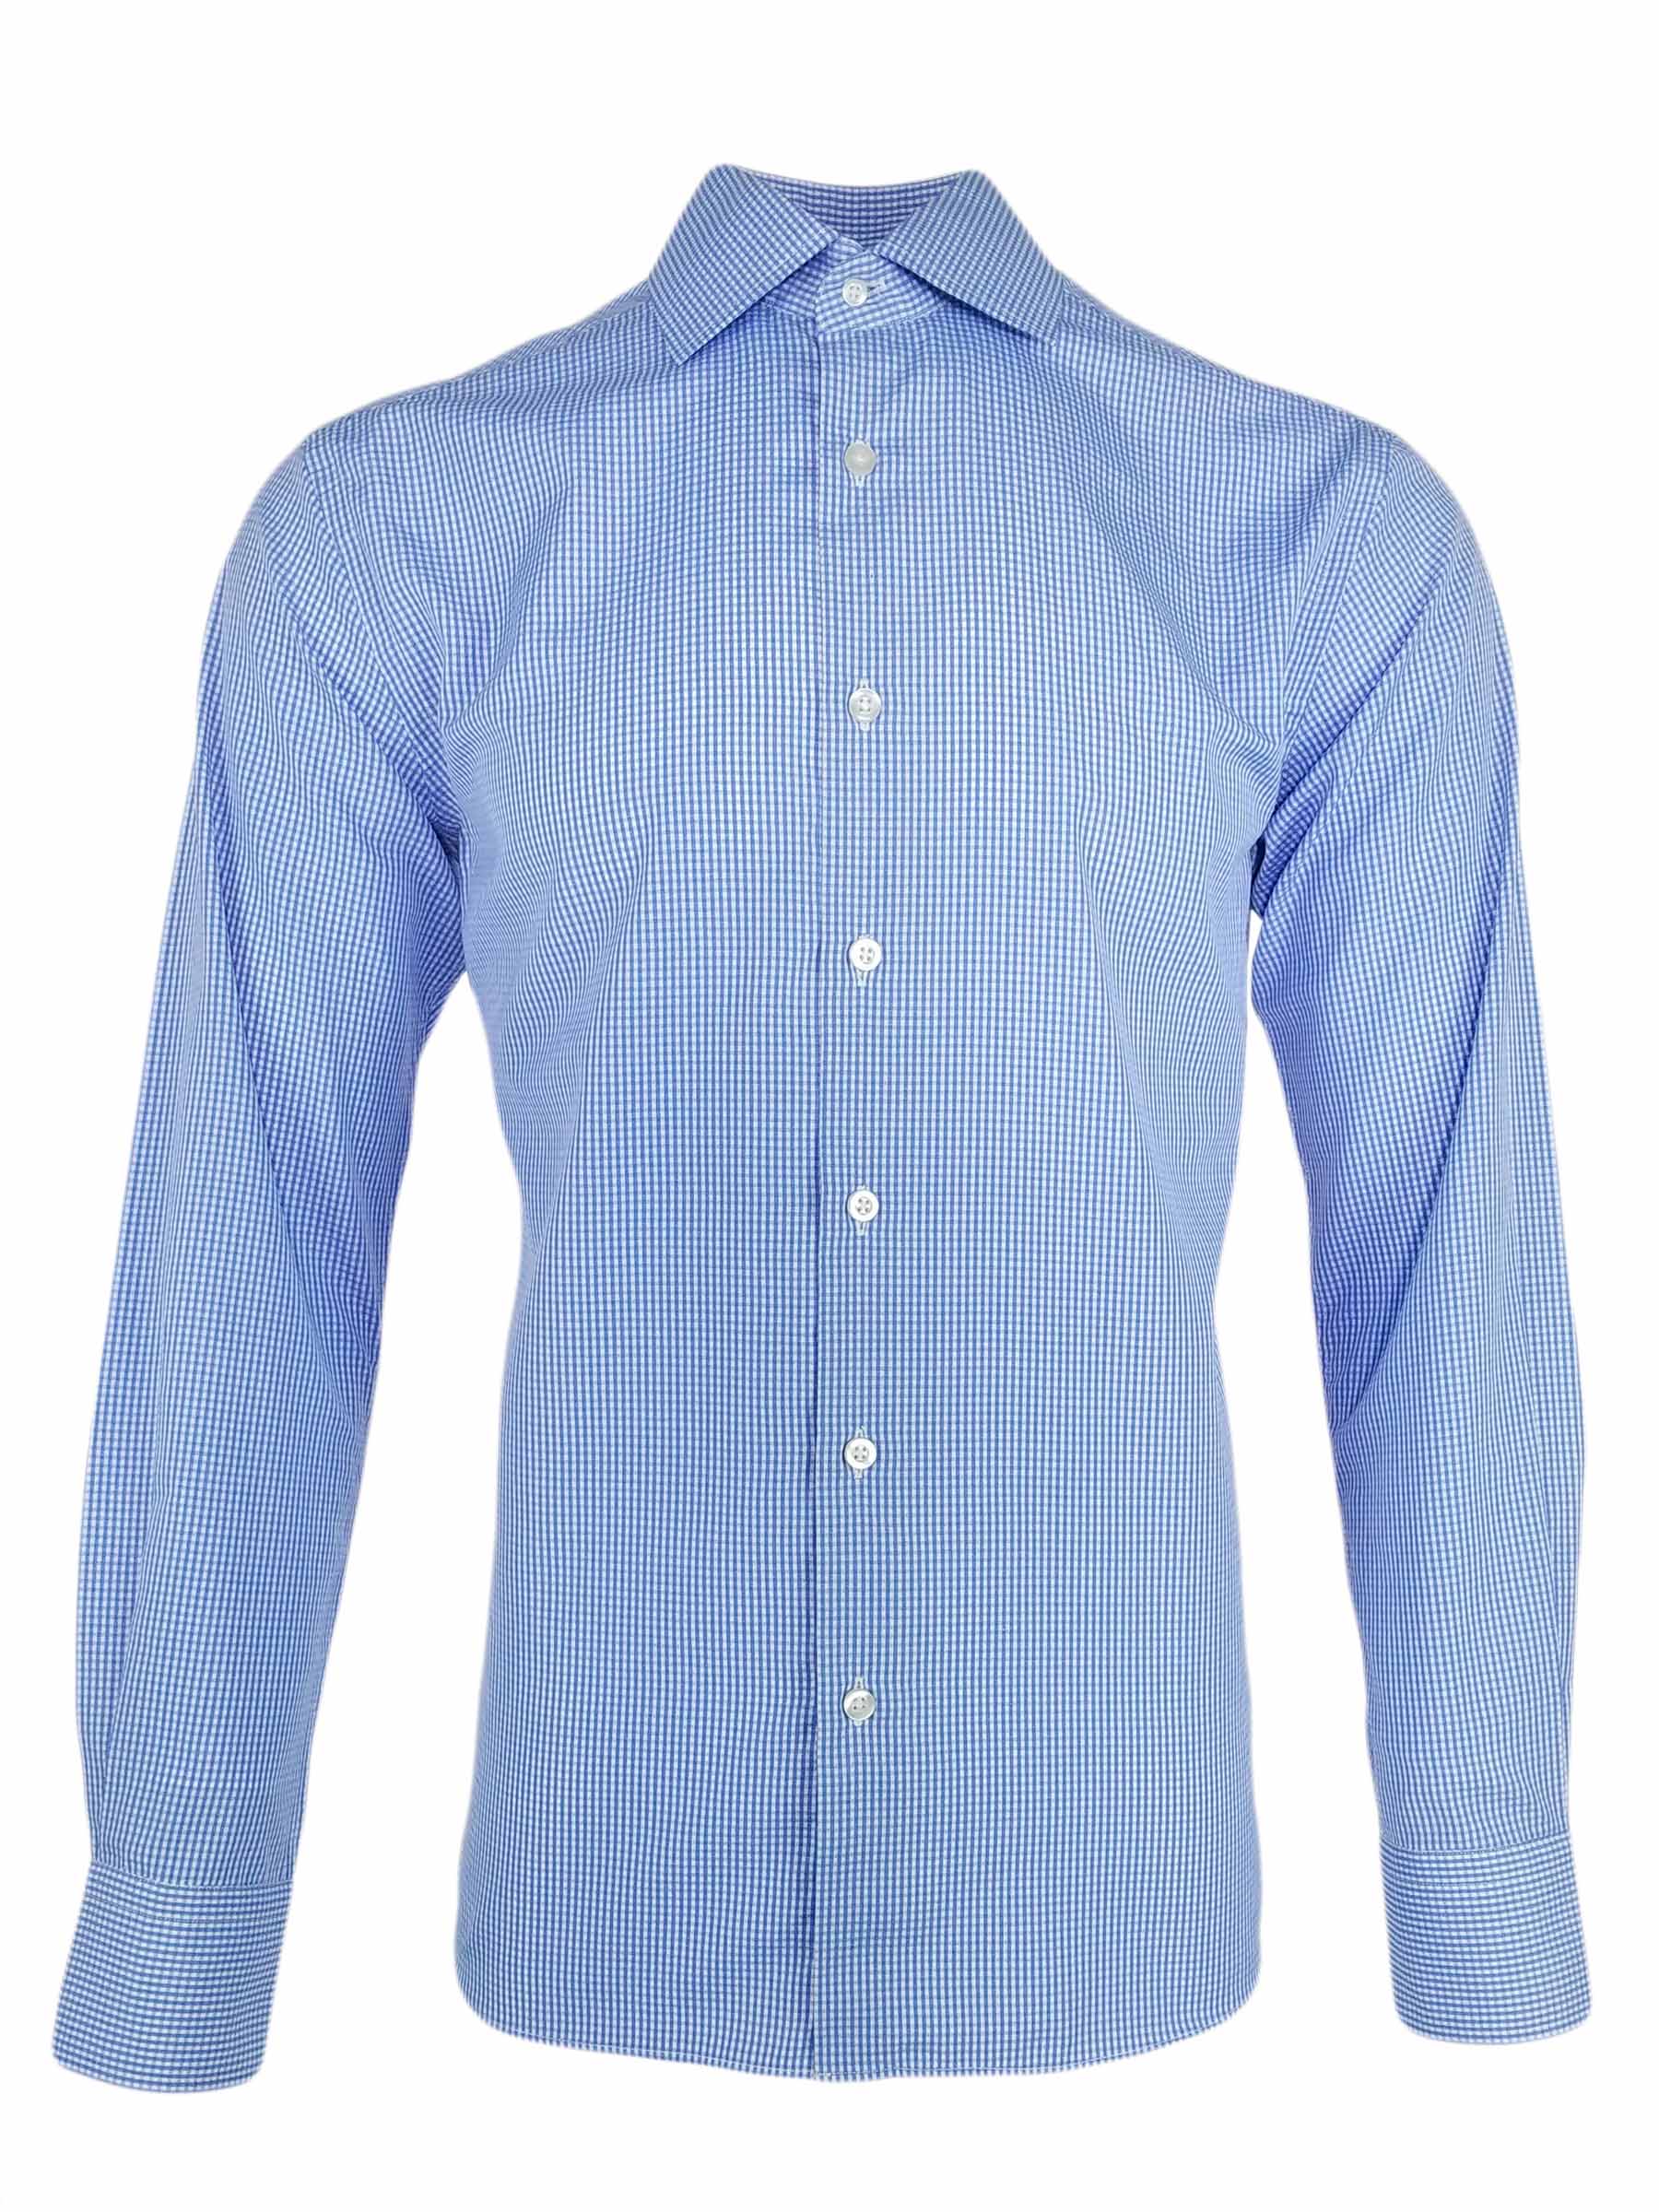 Men's Gingham Shirt - Blue Mini Gingham Check Shirt Long Sleeve ...